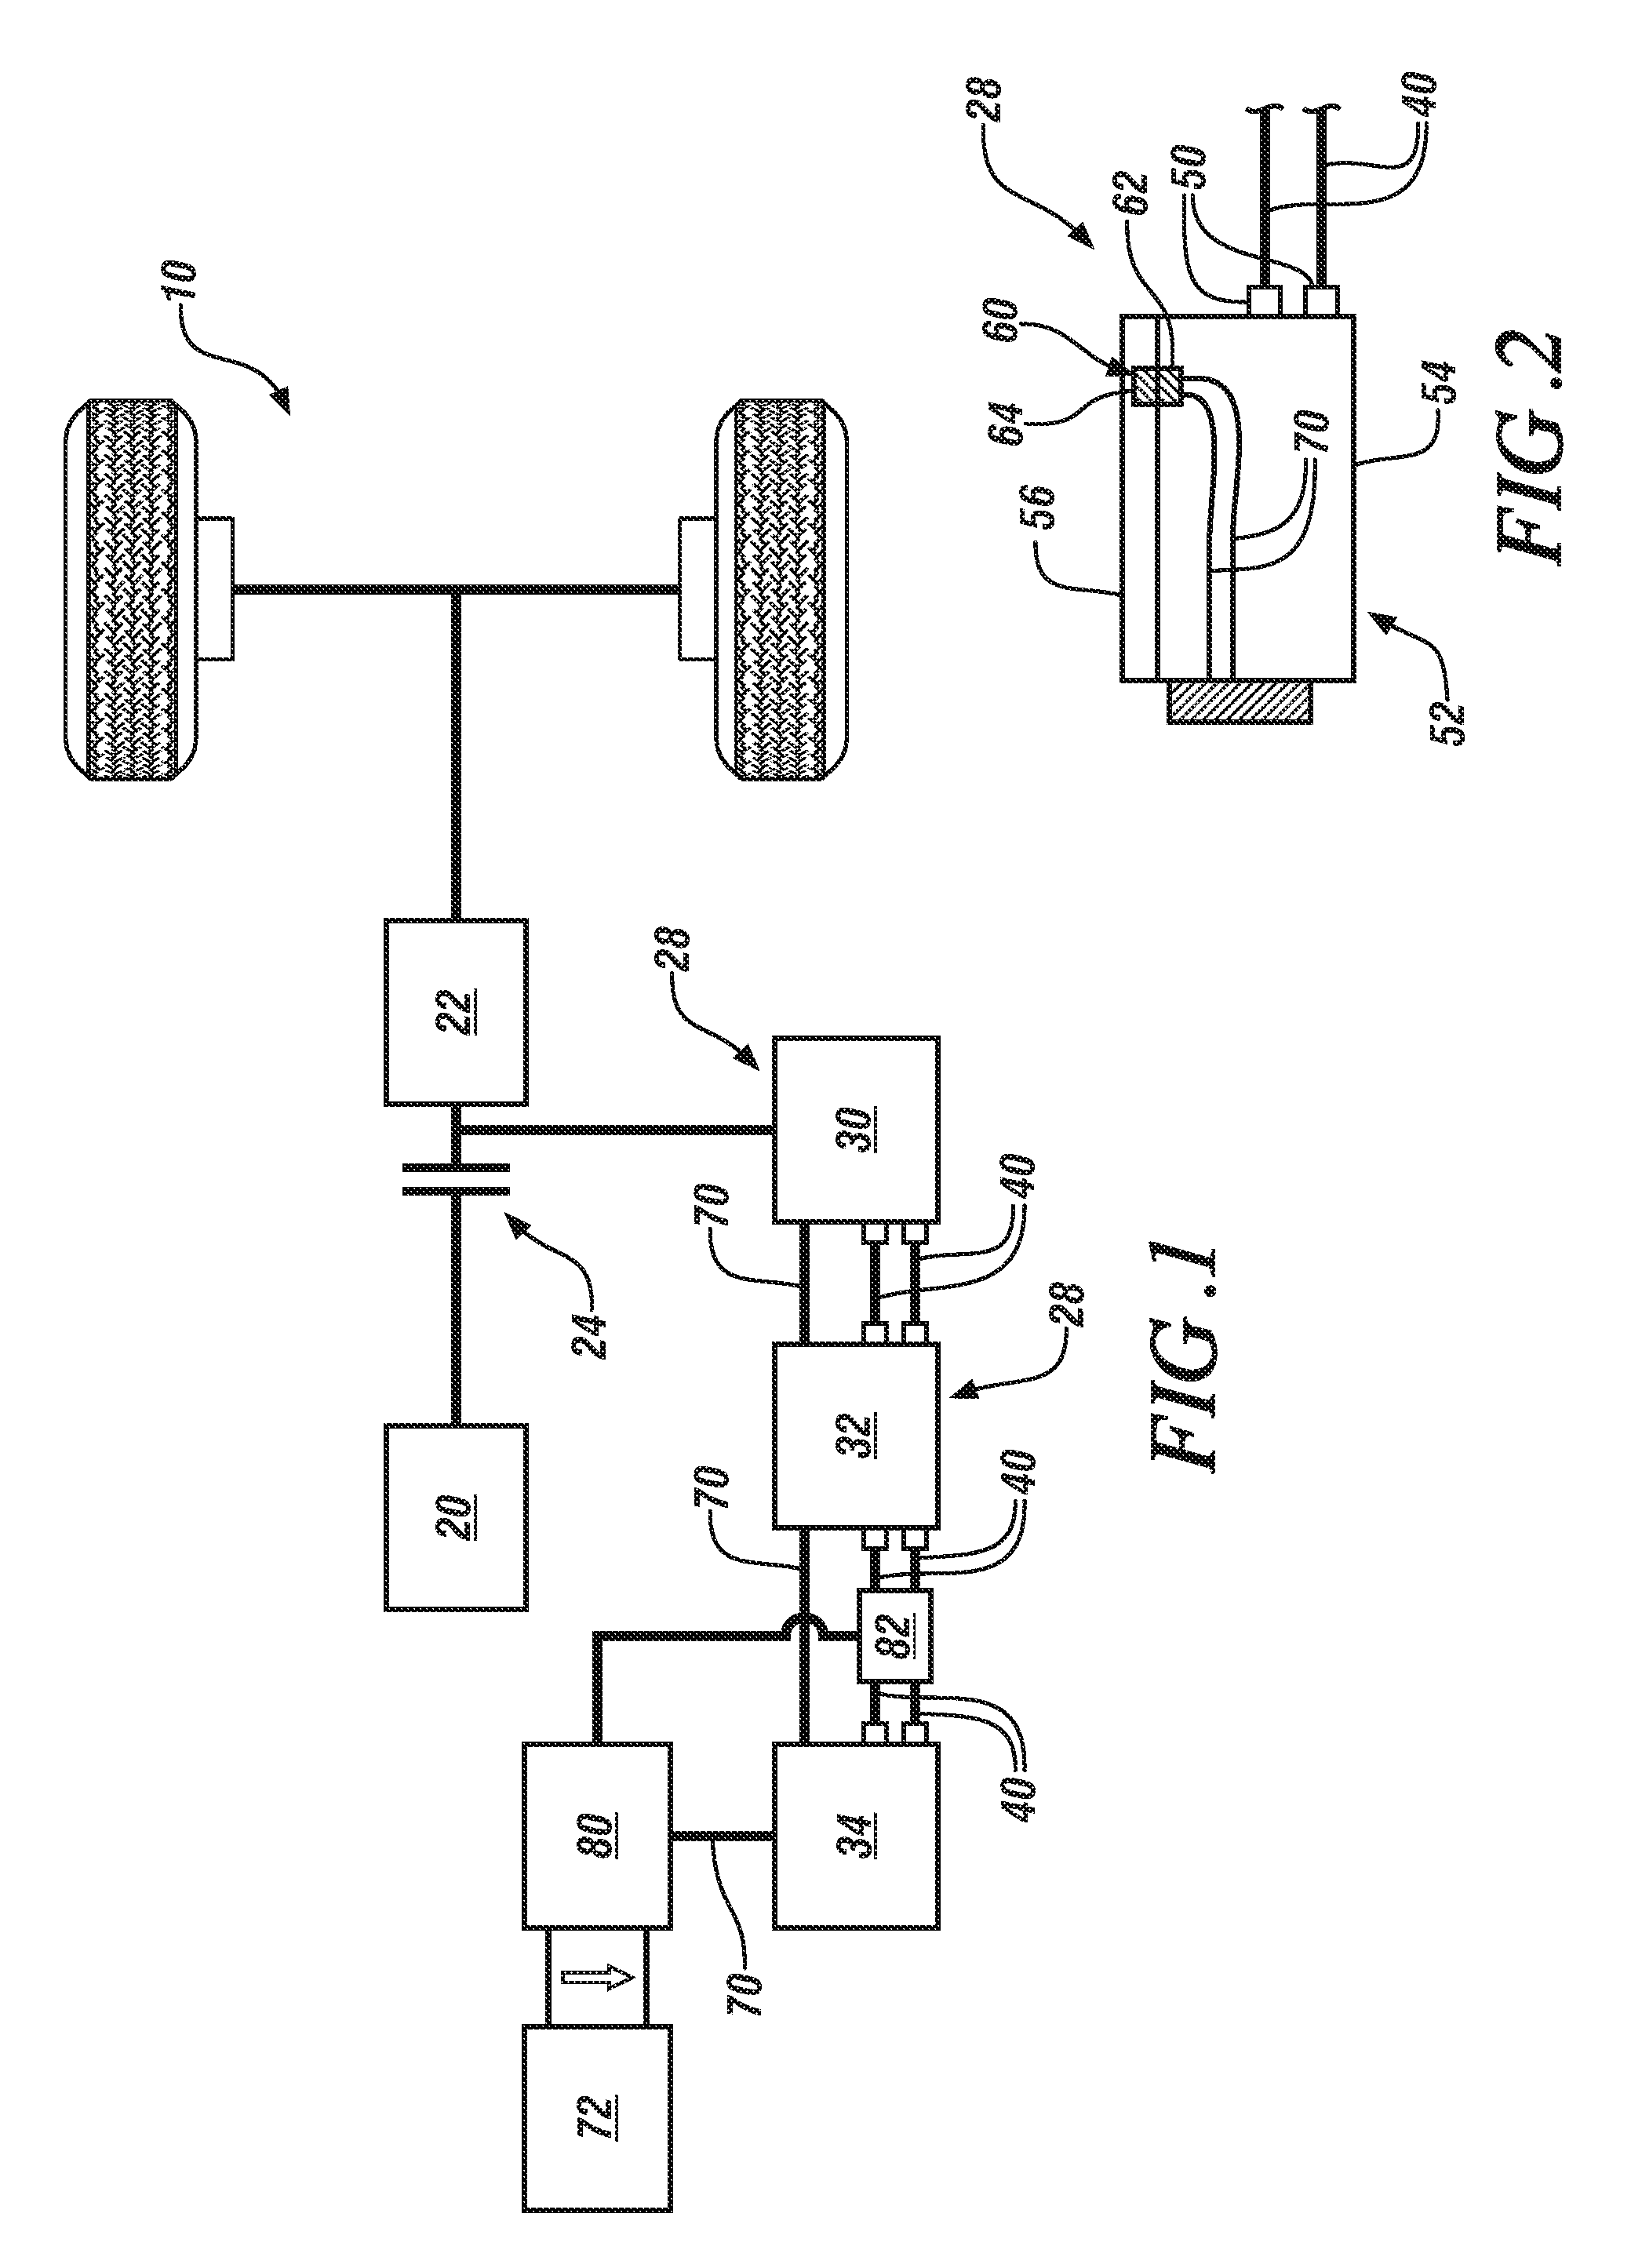 High-voltage interlock loop (“HVIL”) switch having a reed relay